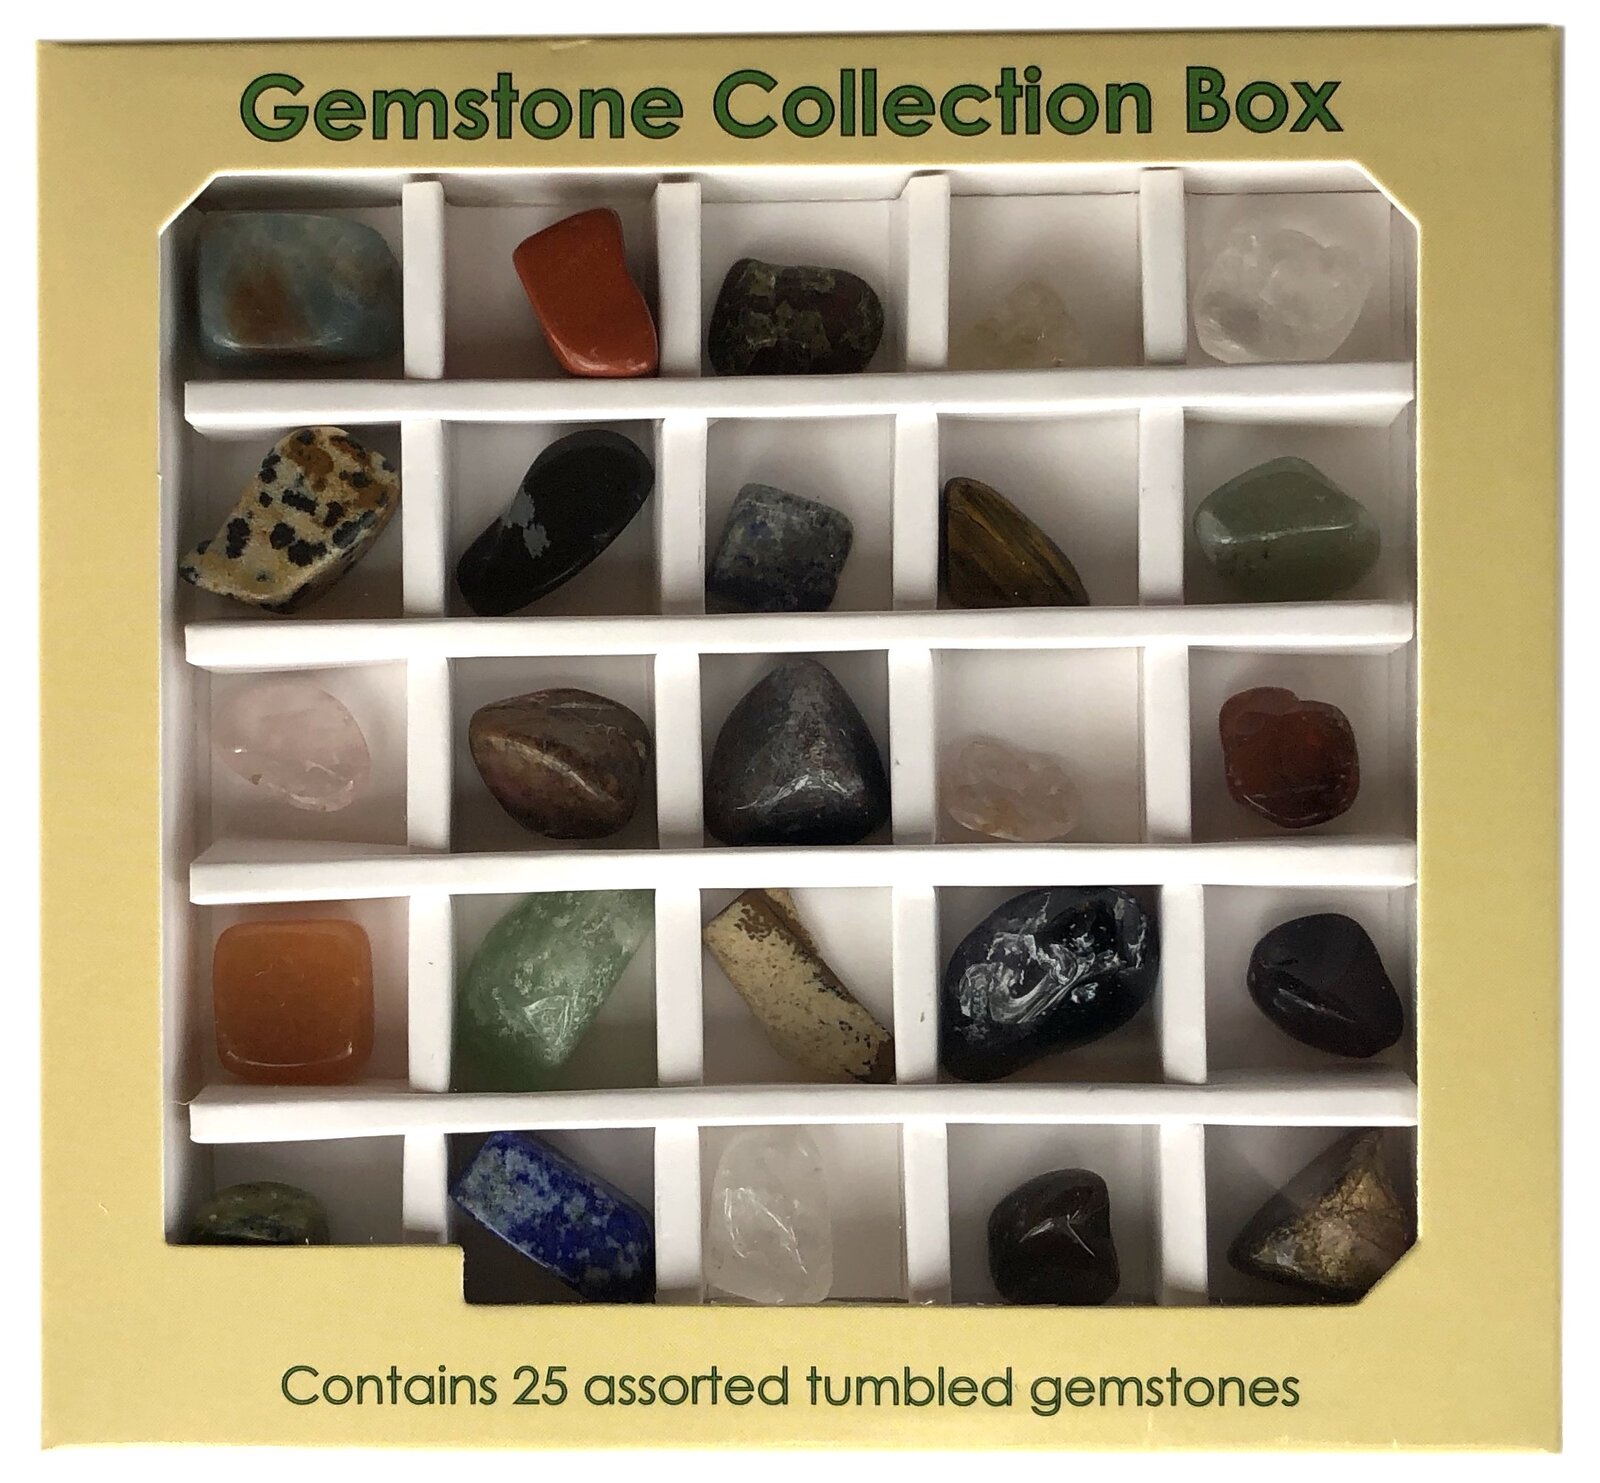 Gemstone Collection box image